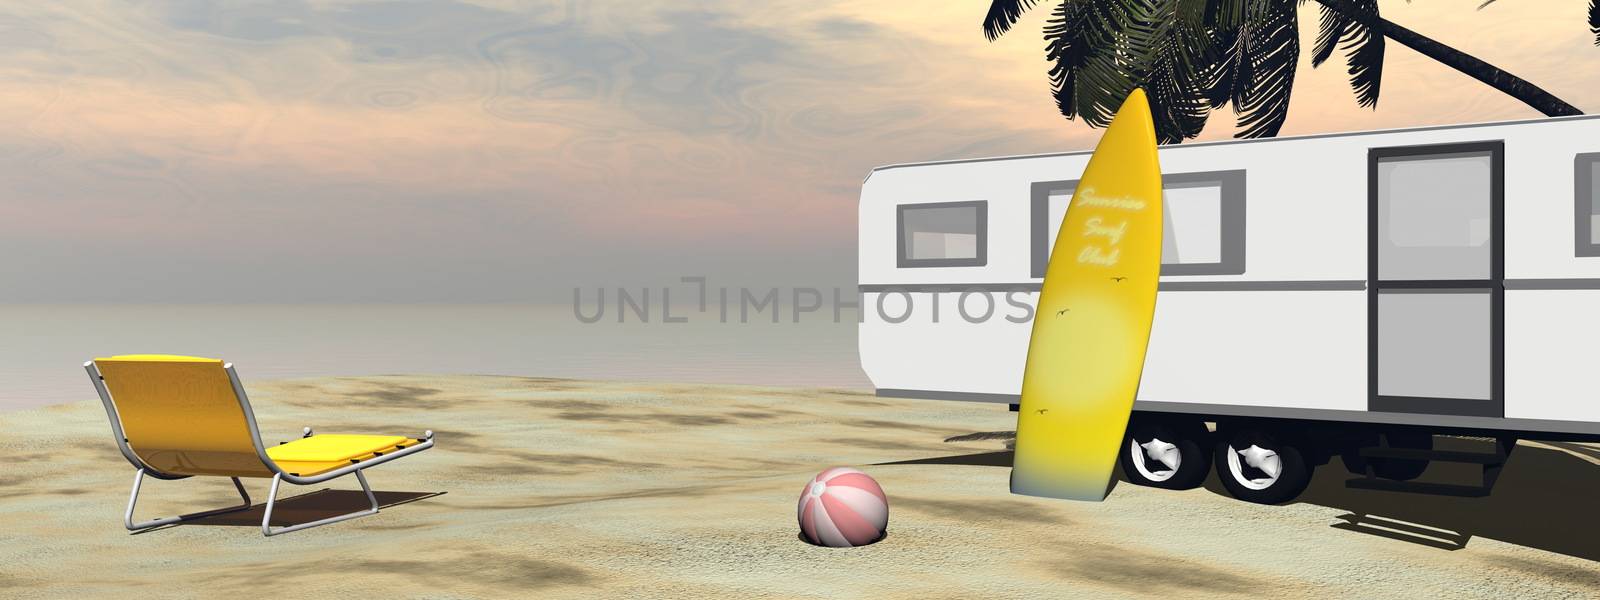 Caravan holidays at the beach - 3D render by Elenaphotos21